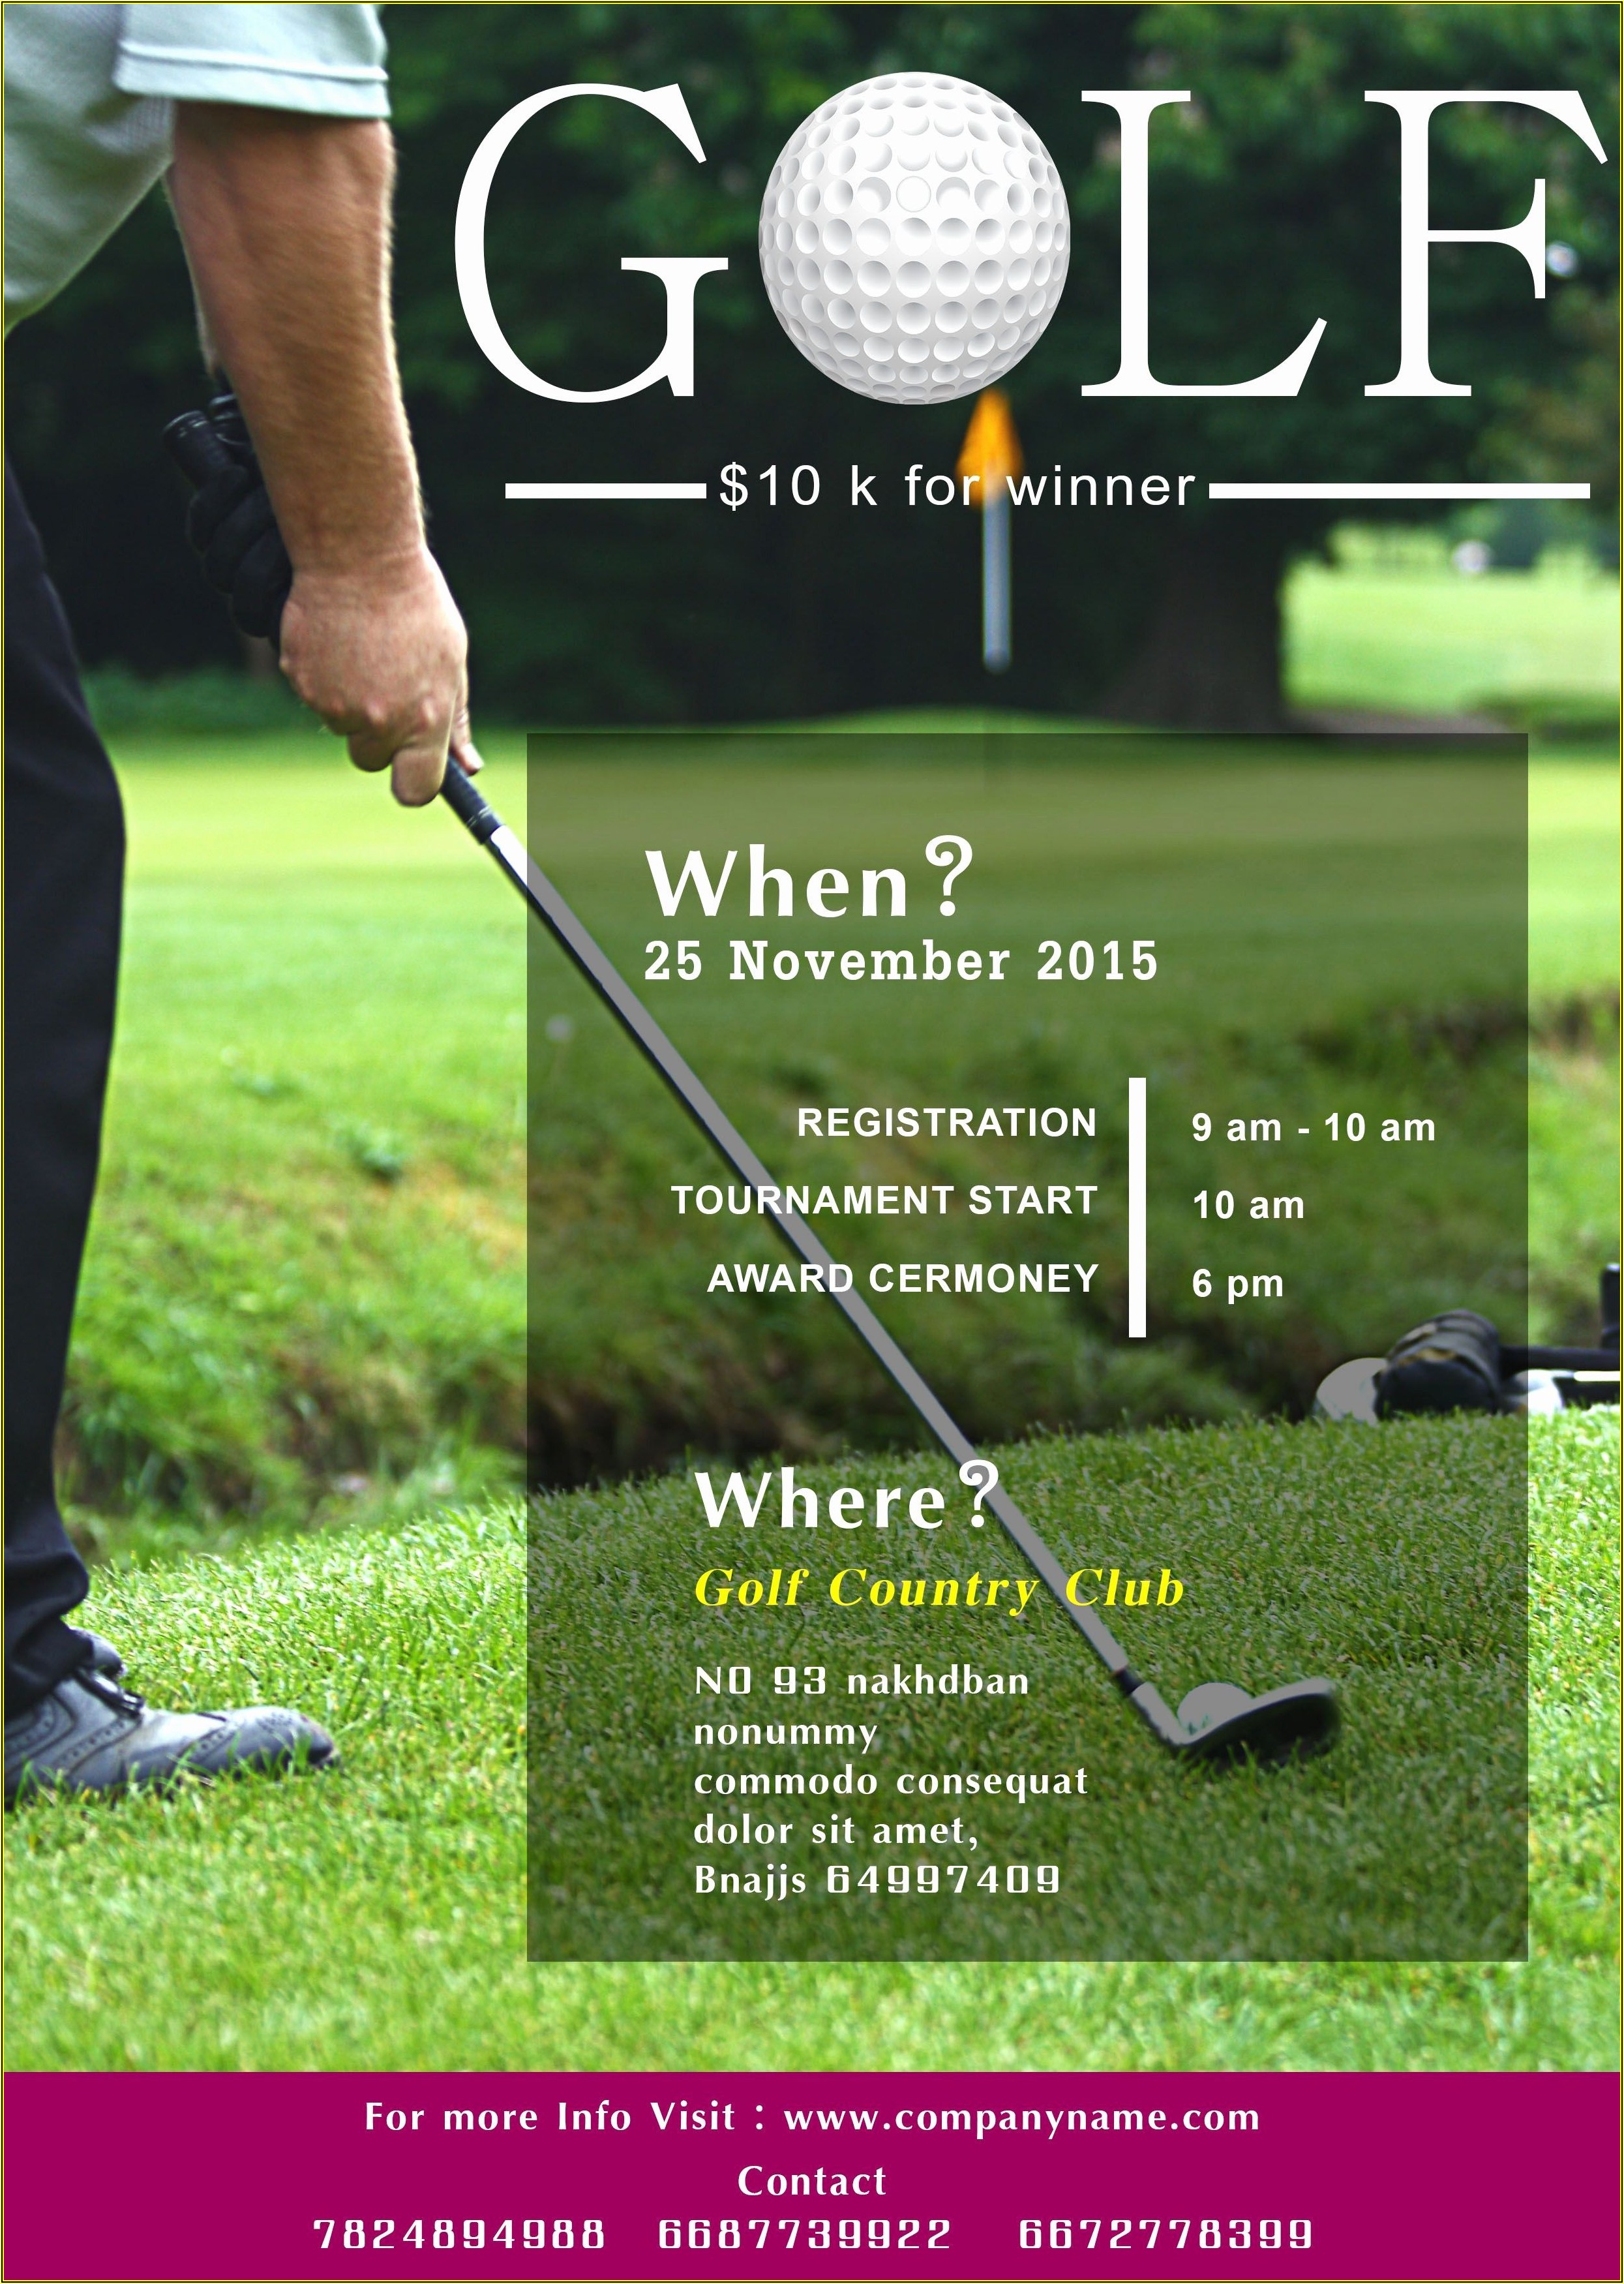 Free Golf Tournament Flyer Template